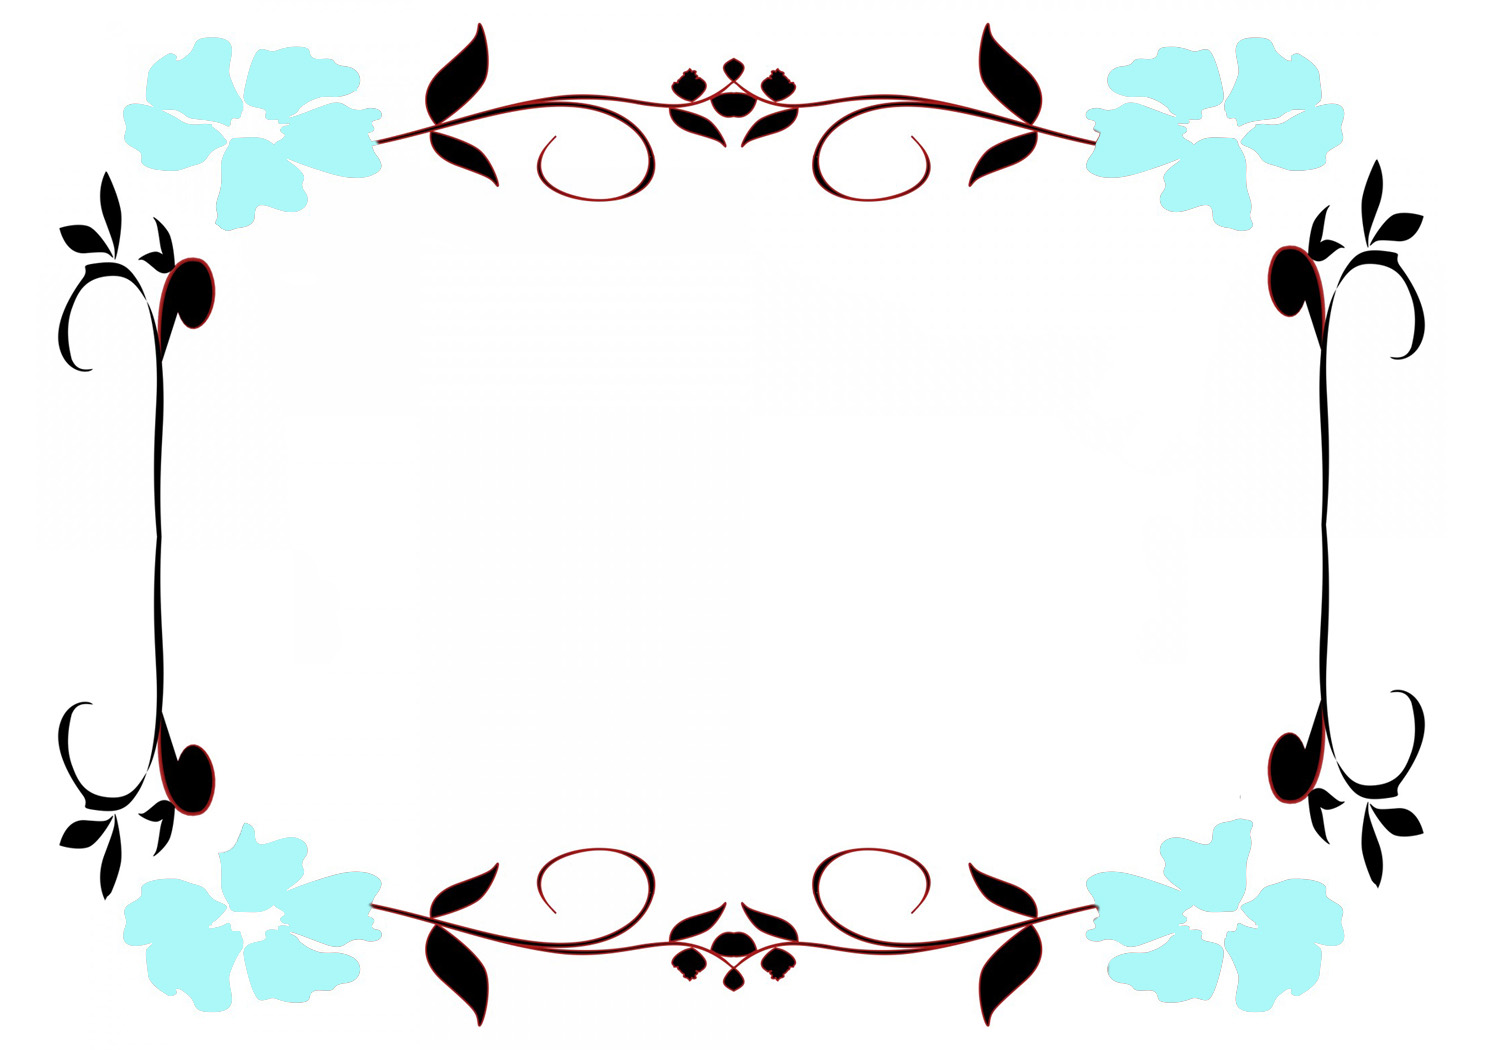 flower frames and borders clip art